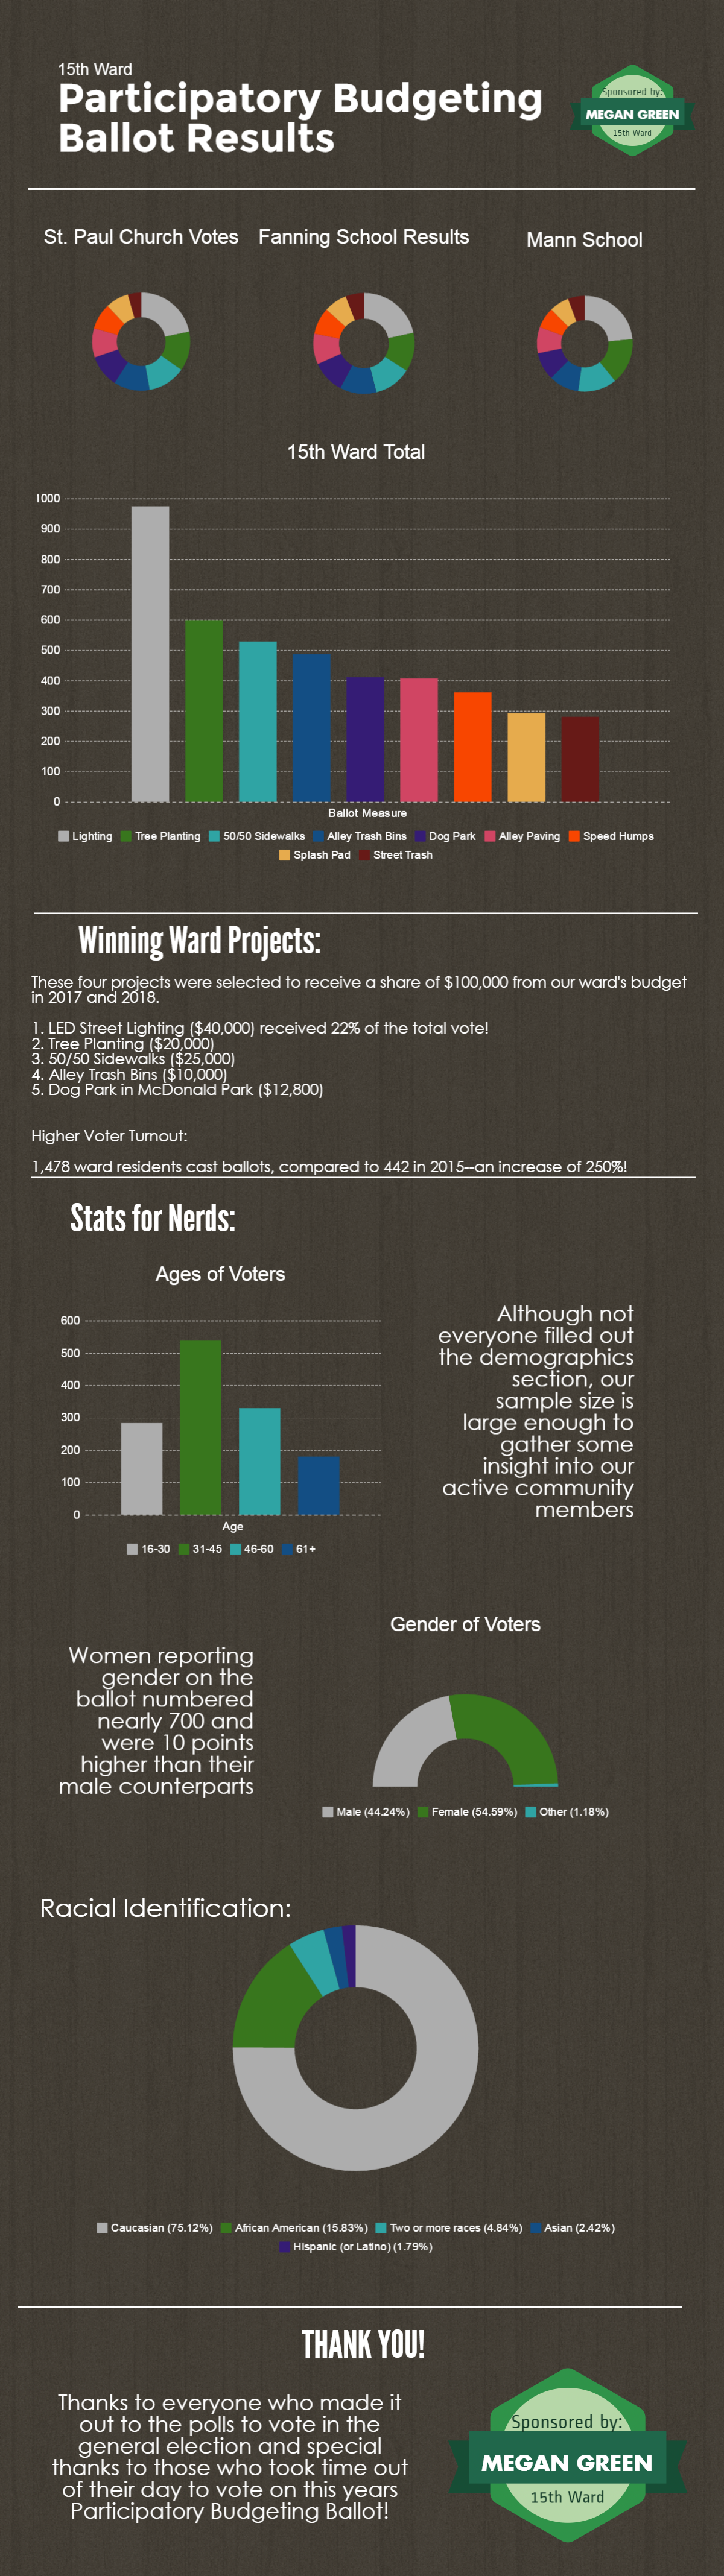 Participatory Budgeting Ballot Results